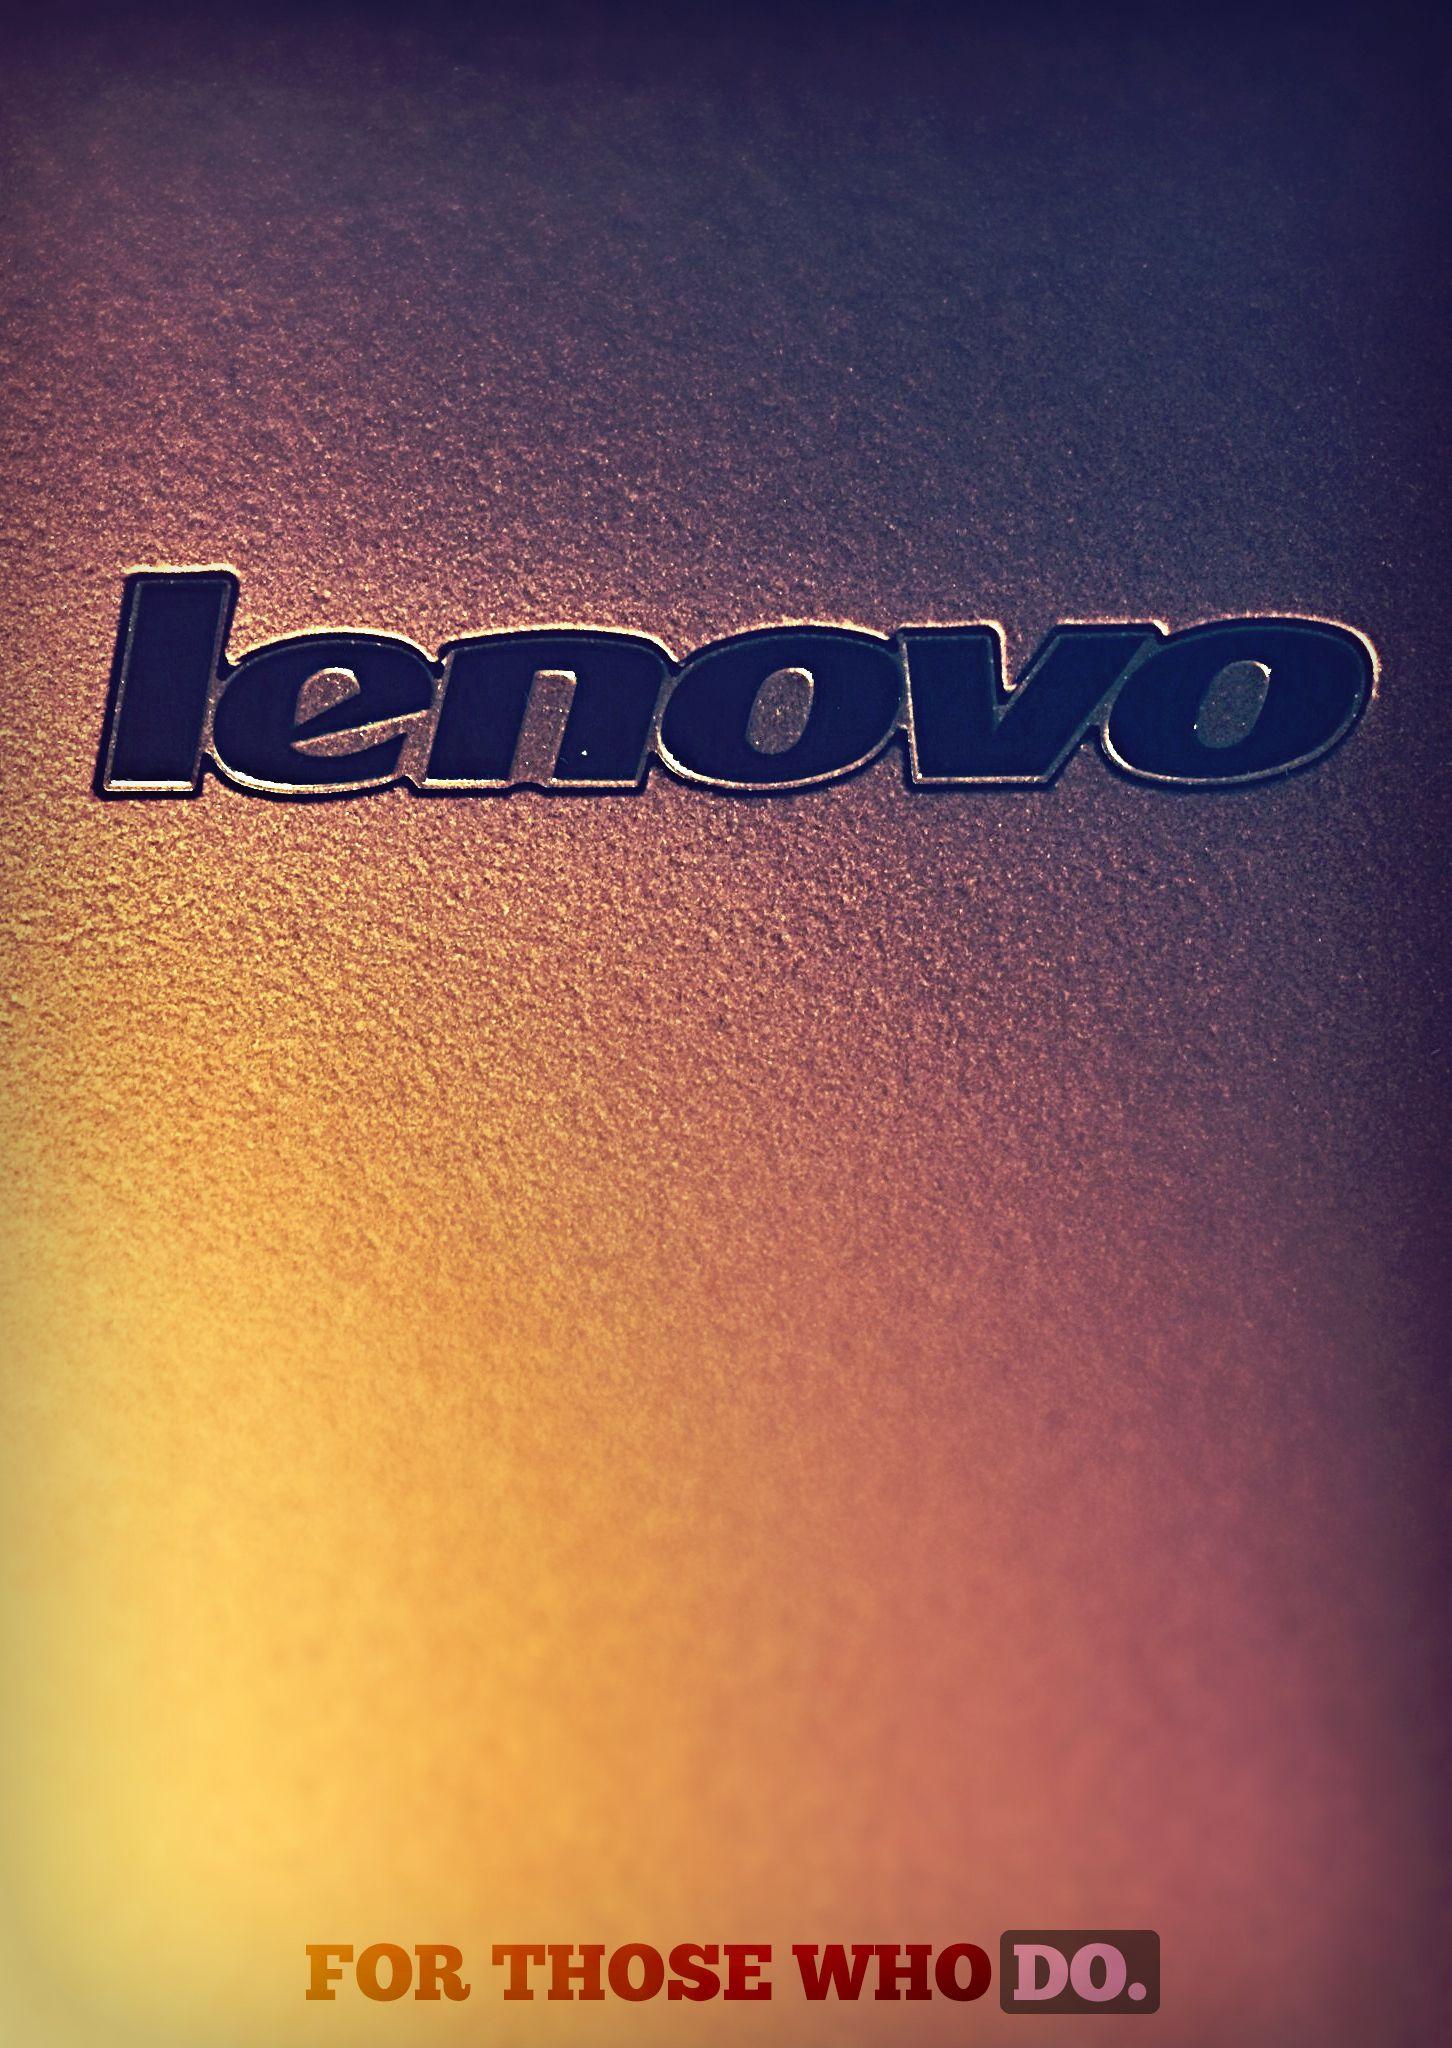 Lenovo Logo 2014 HD Wallpaper, Background Image